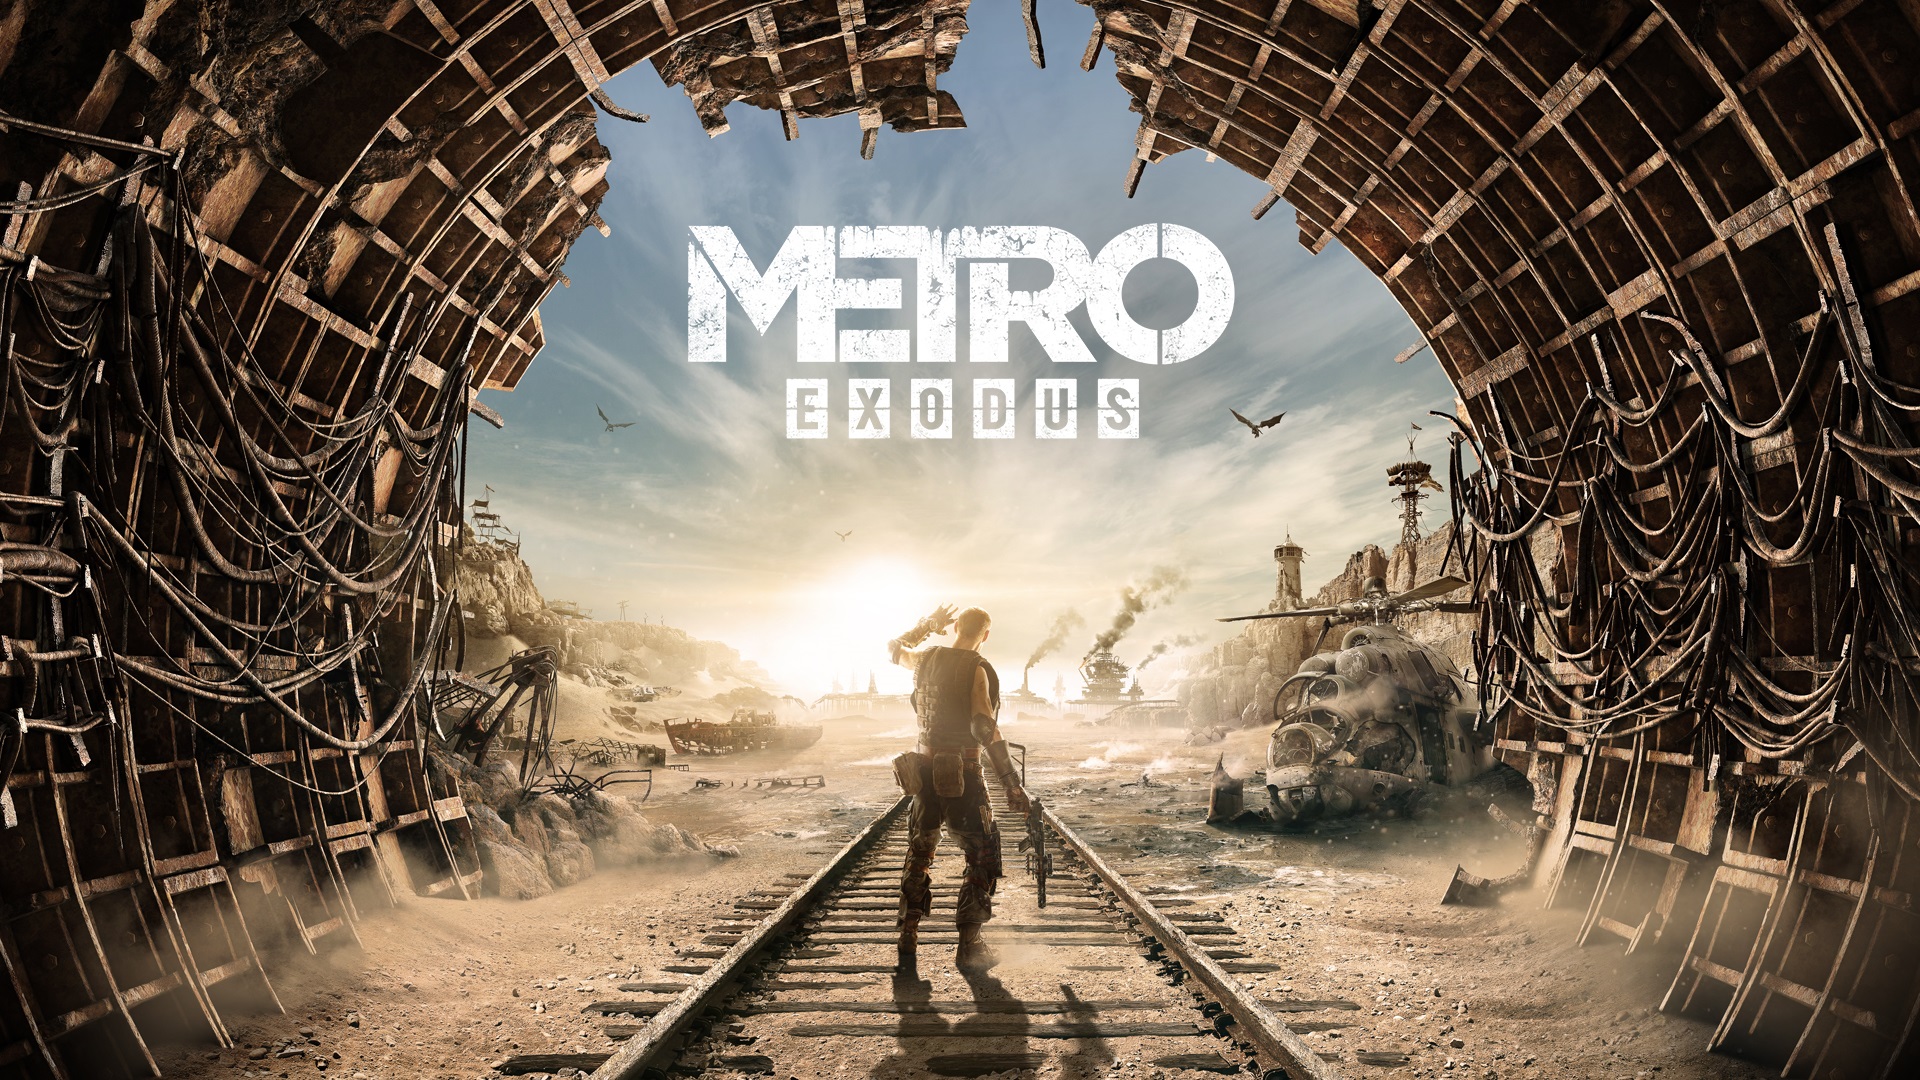 Metro Exodus Pc Enhanced Edition Now Available